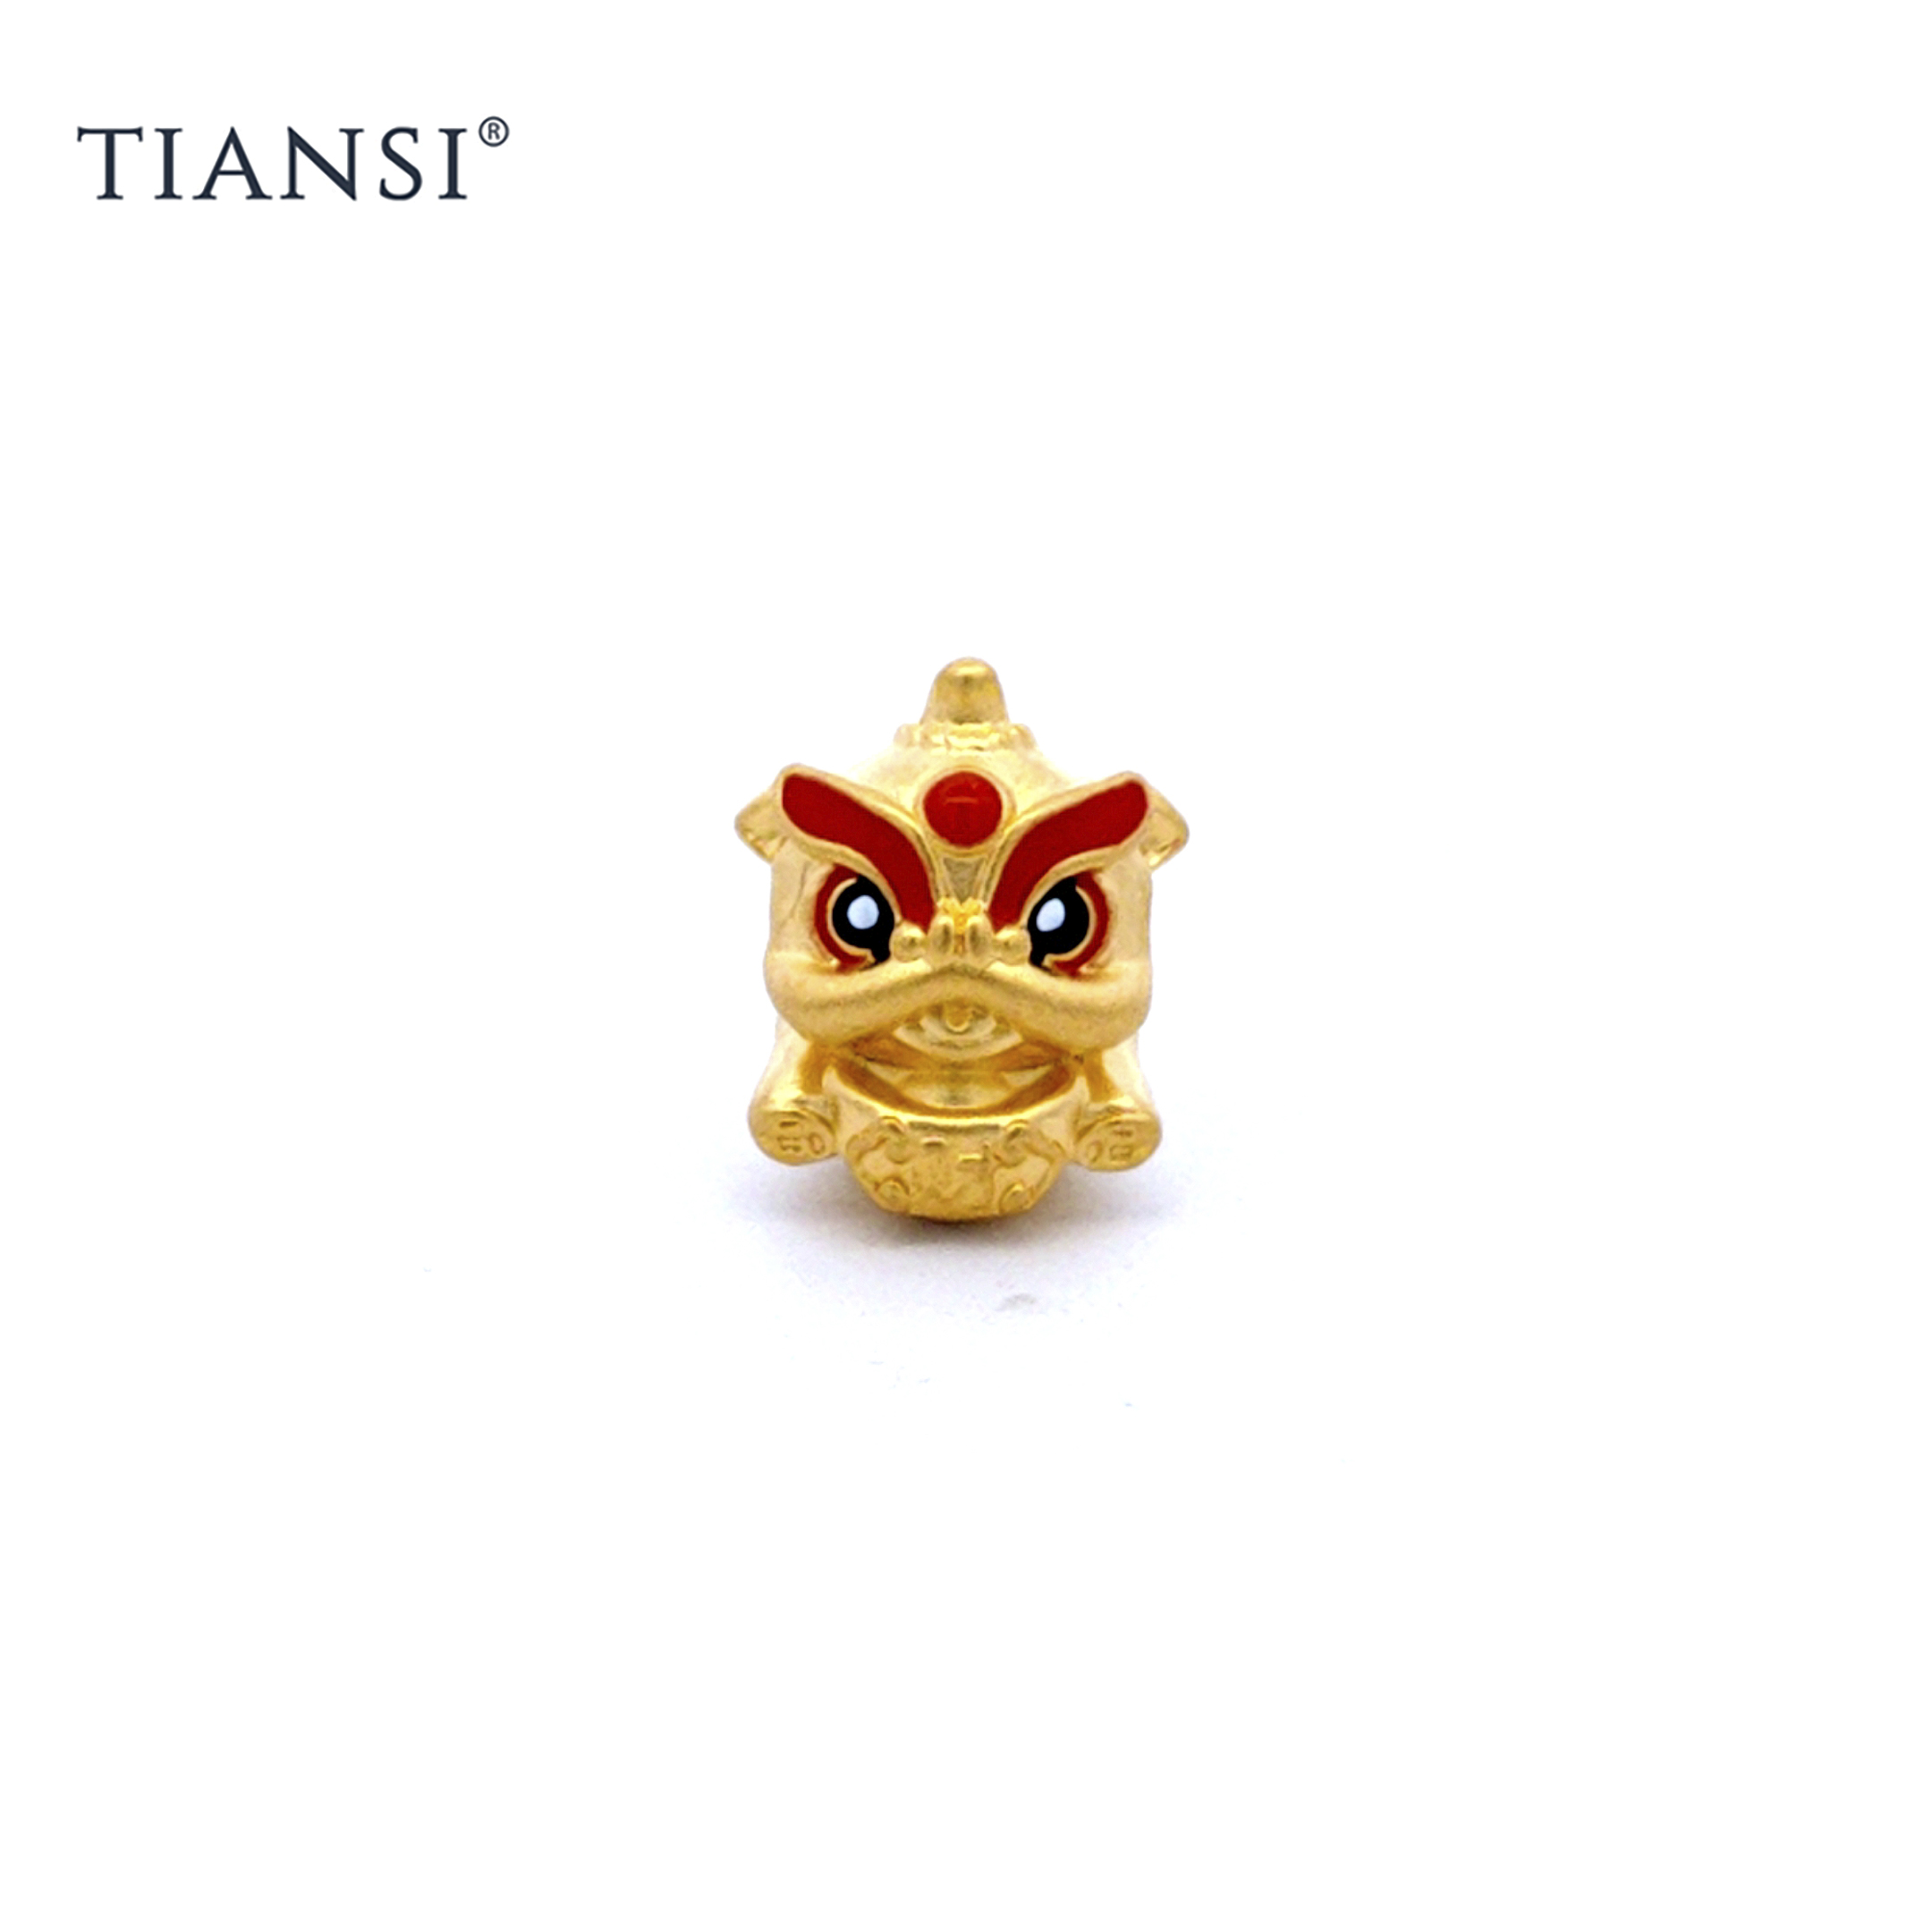 TIANSI 999(24K) Gold Copper Coin Dancing Lion Charm 铜钱舞狮路路通 Charm Emas